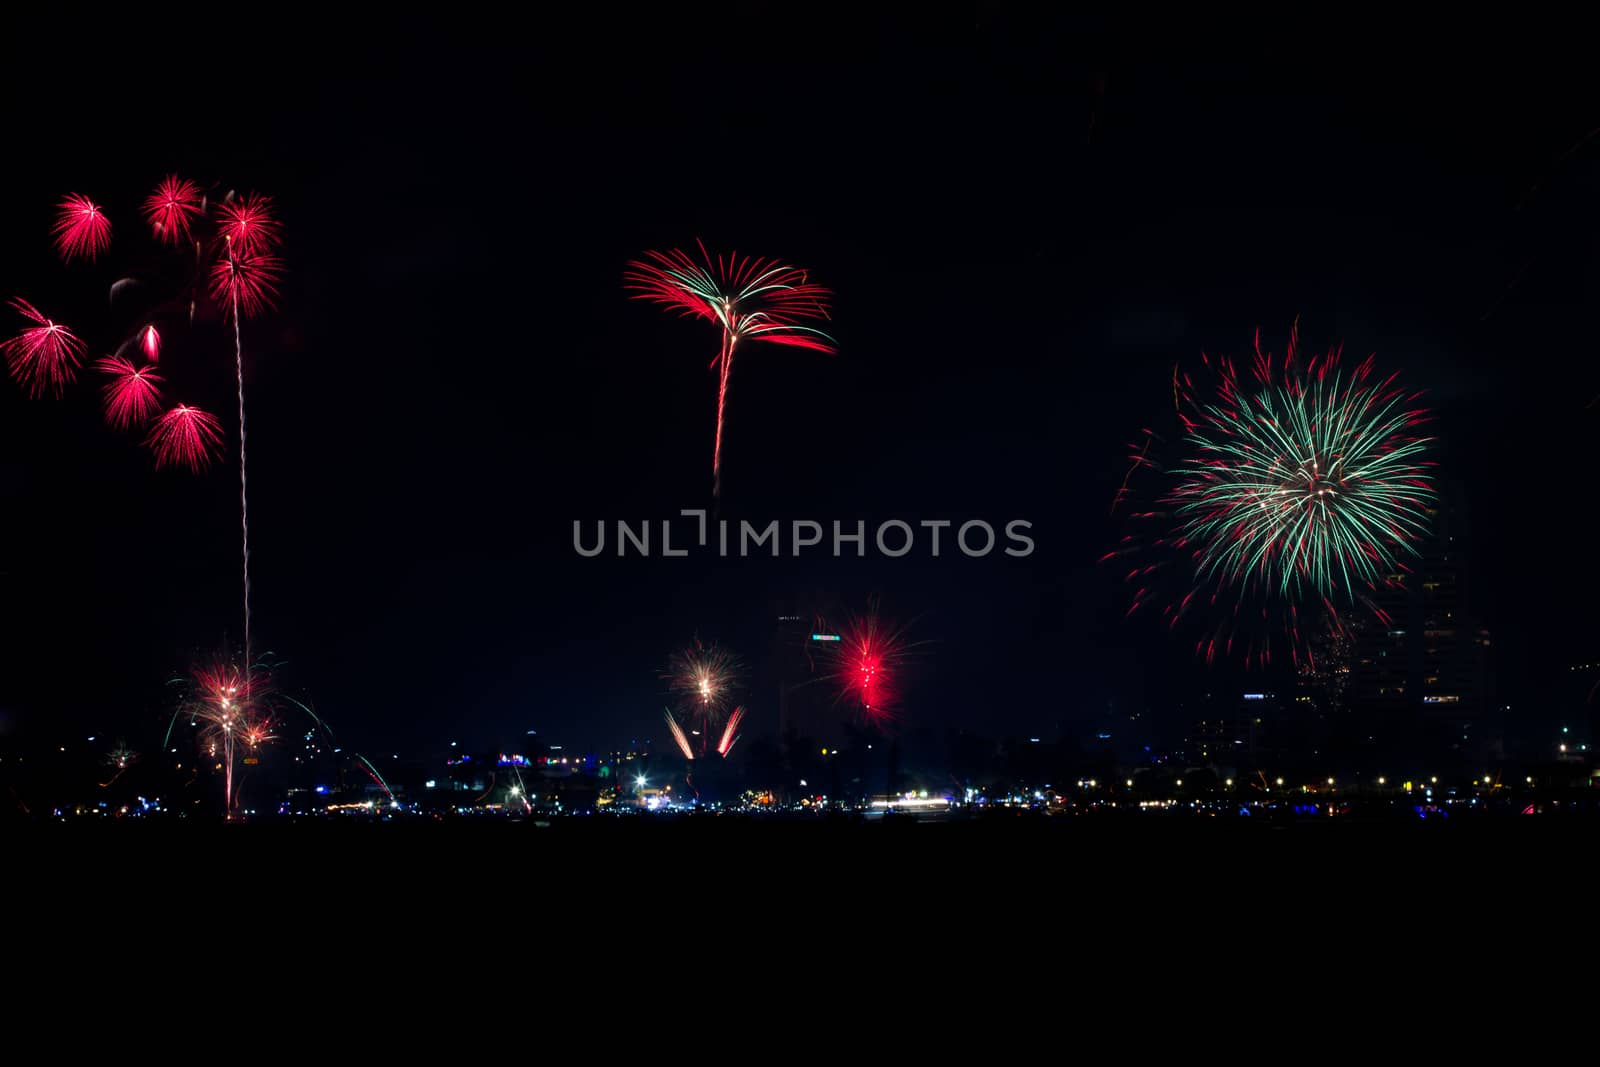 New Year Fireworks by wyoosumran